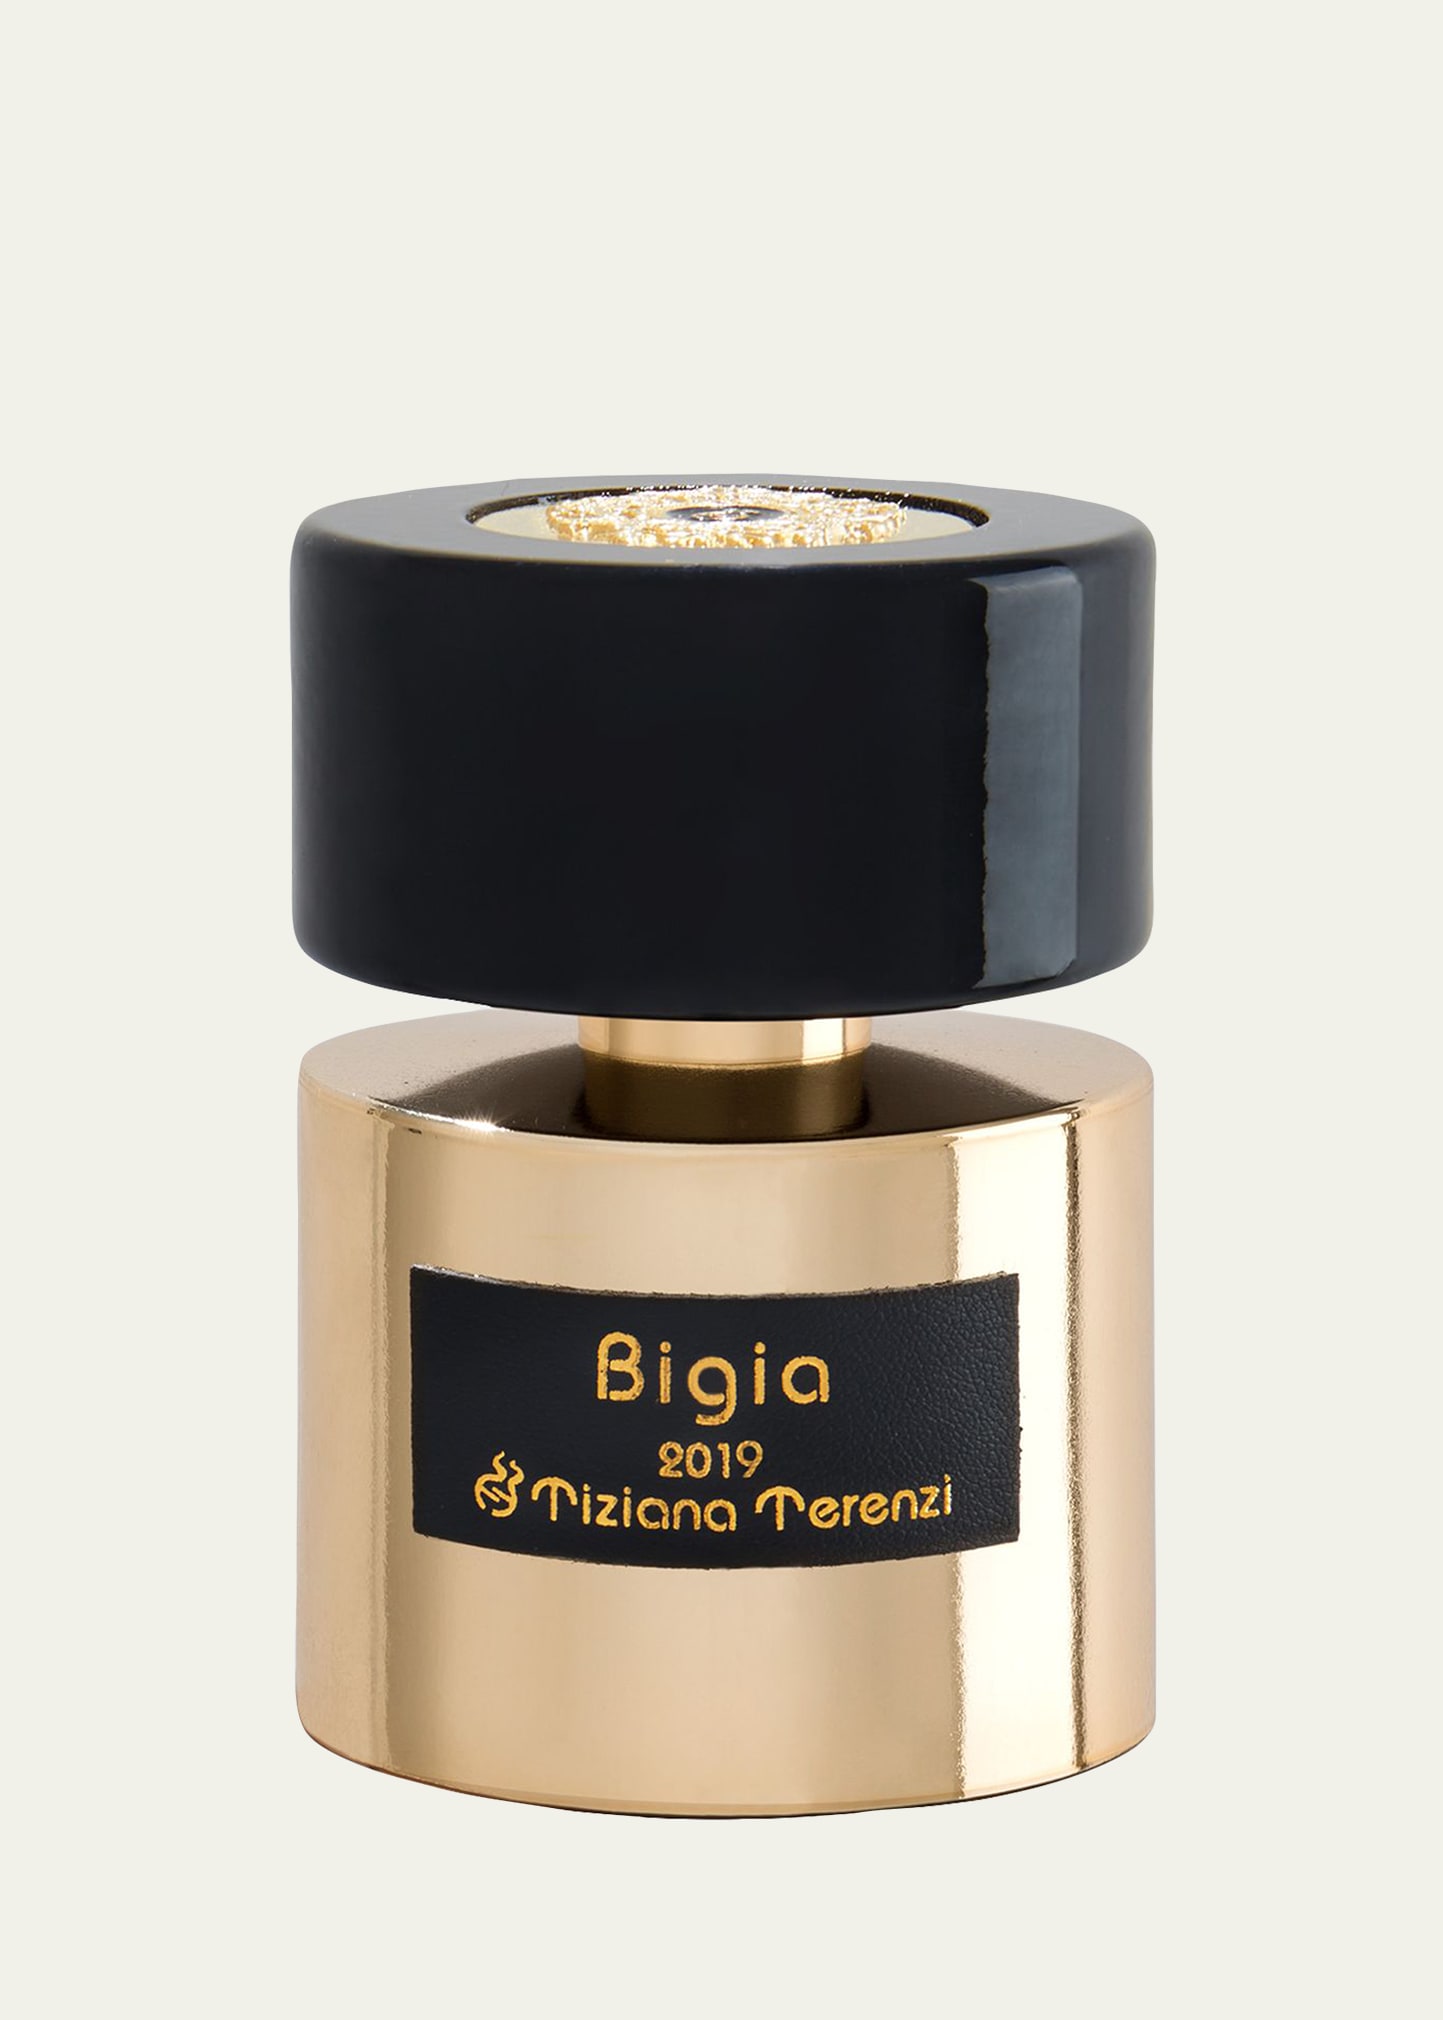 Bigia 2019 Anniversary Extrait de Parfum, 3.4 oz.